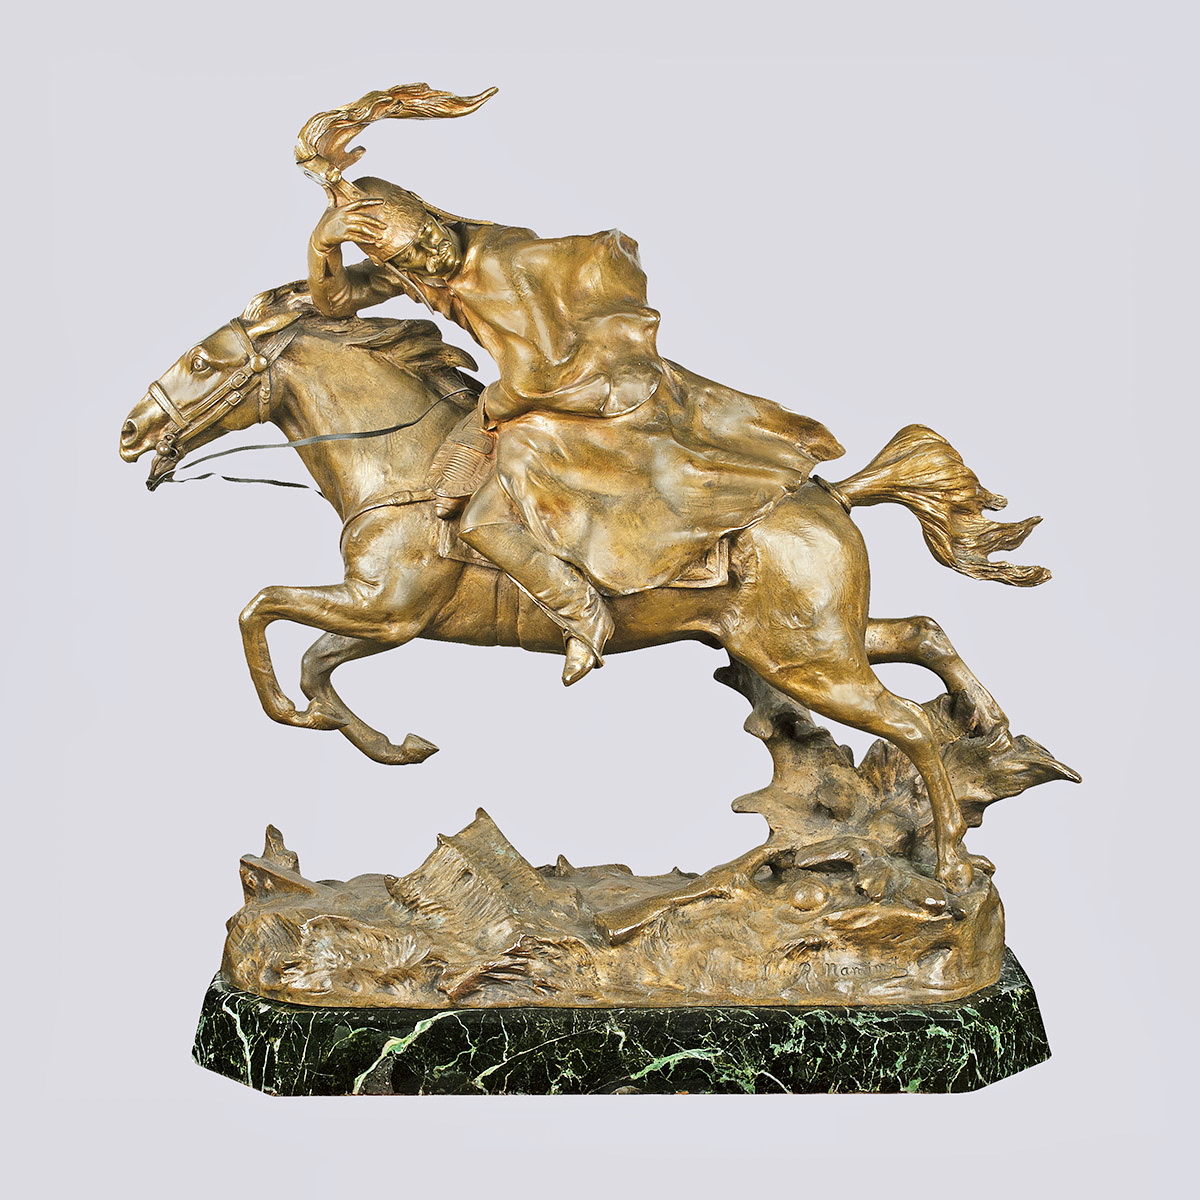 Скульптура «Кавалерист» из бронзы 19 века (R. Nannani, Италия)